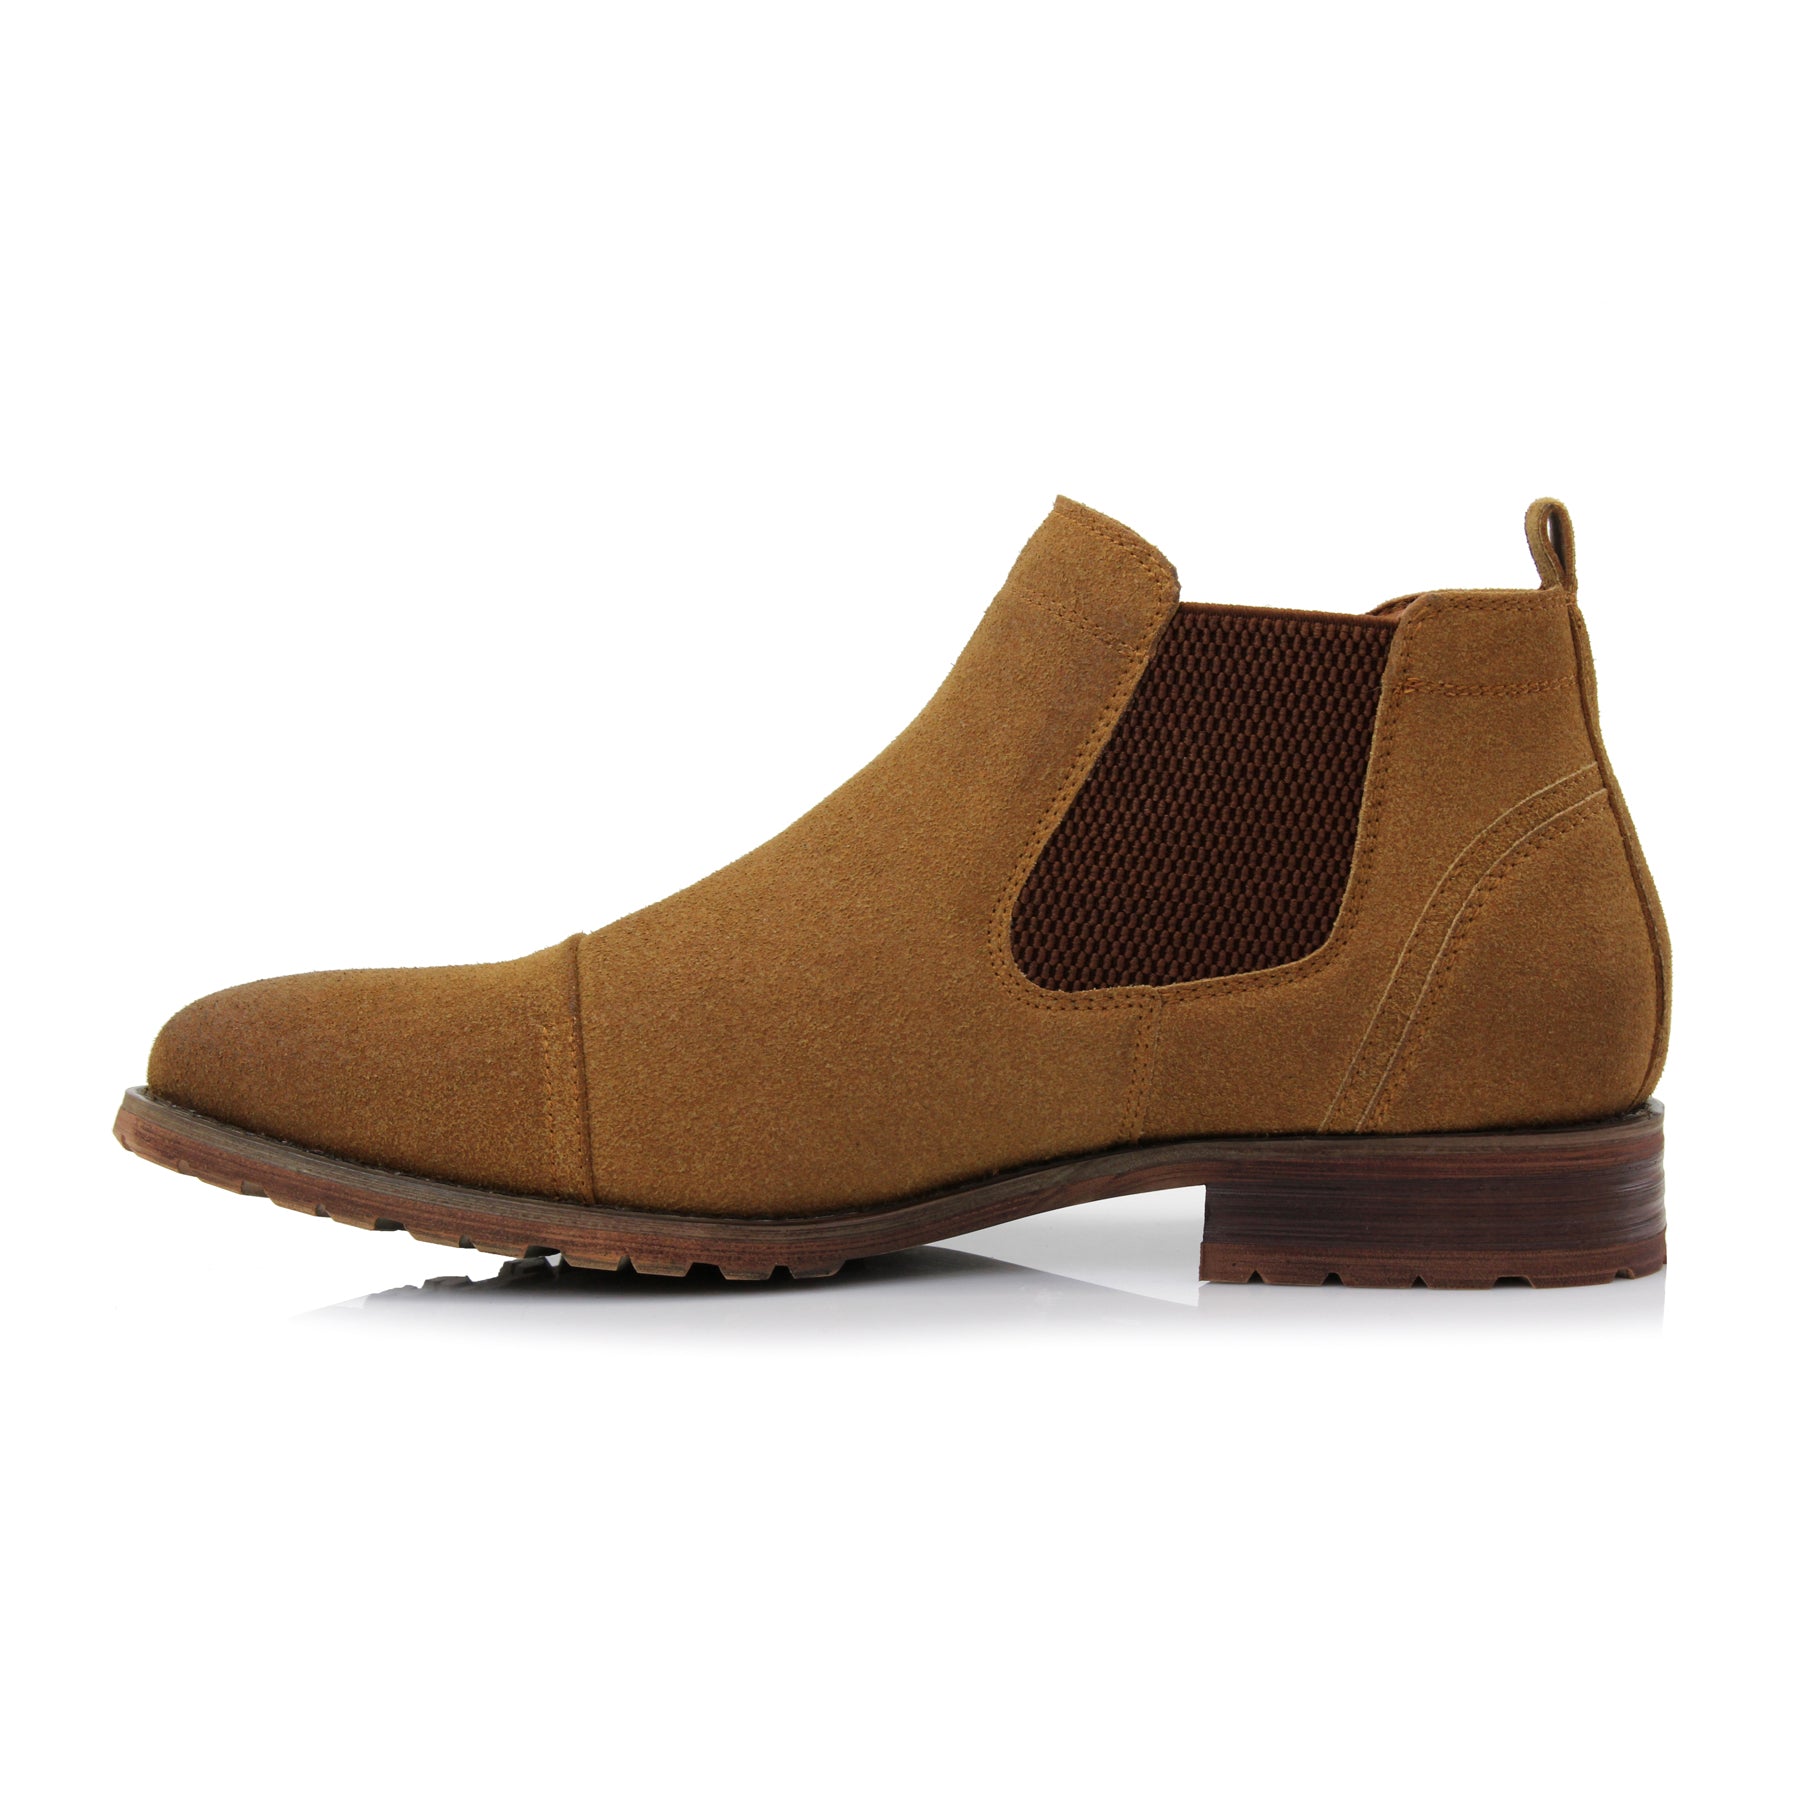 Suede Chelsea Boots | Sterling by Ferro Aldo | Conal Footwear | Inner Side Angle View